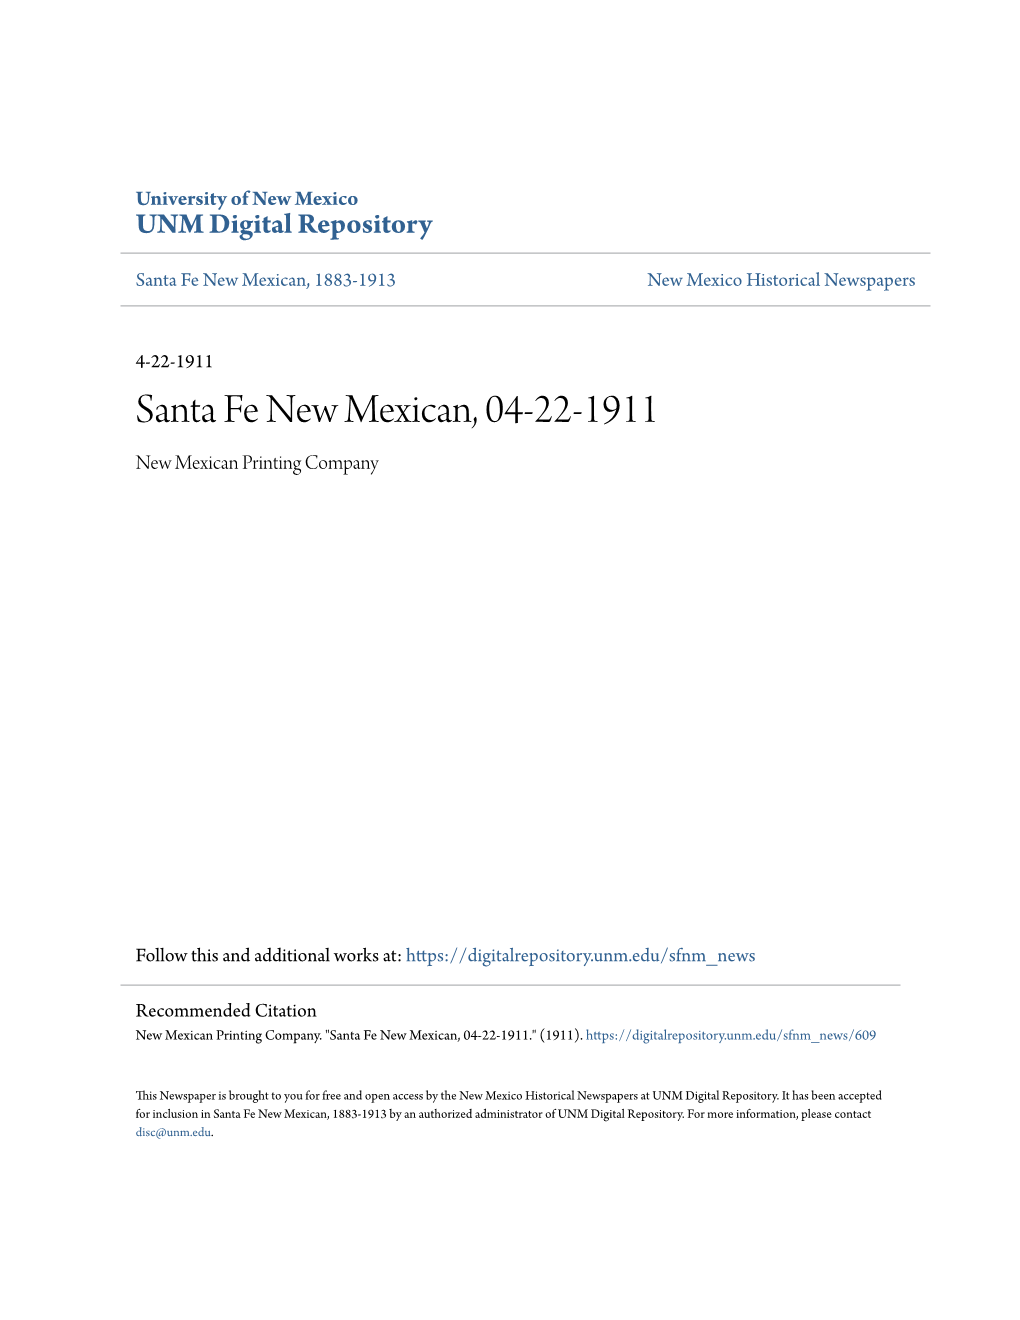 Santa Fe New Mexican, 04-22-1911 New Mexican Printing Company